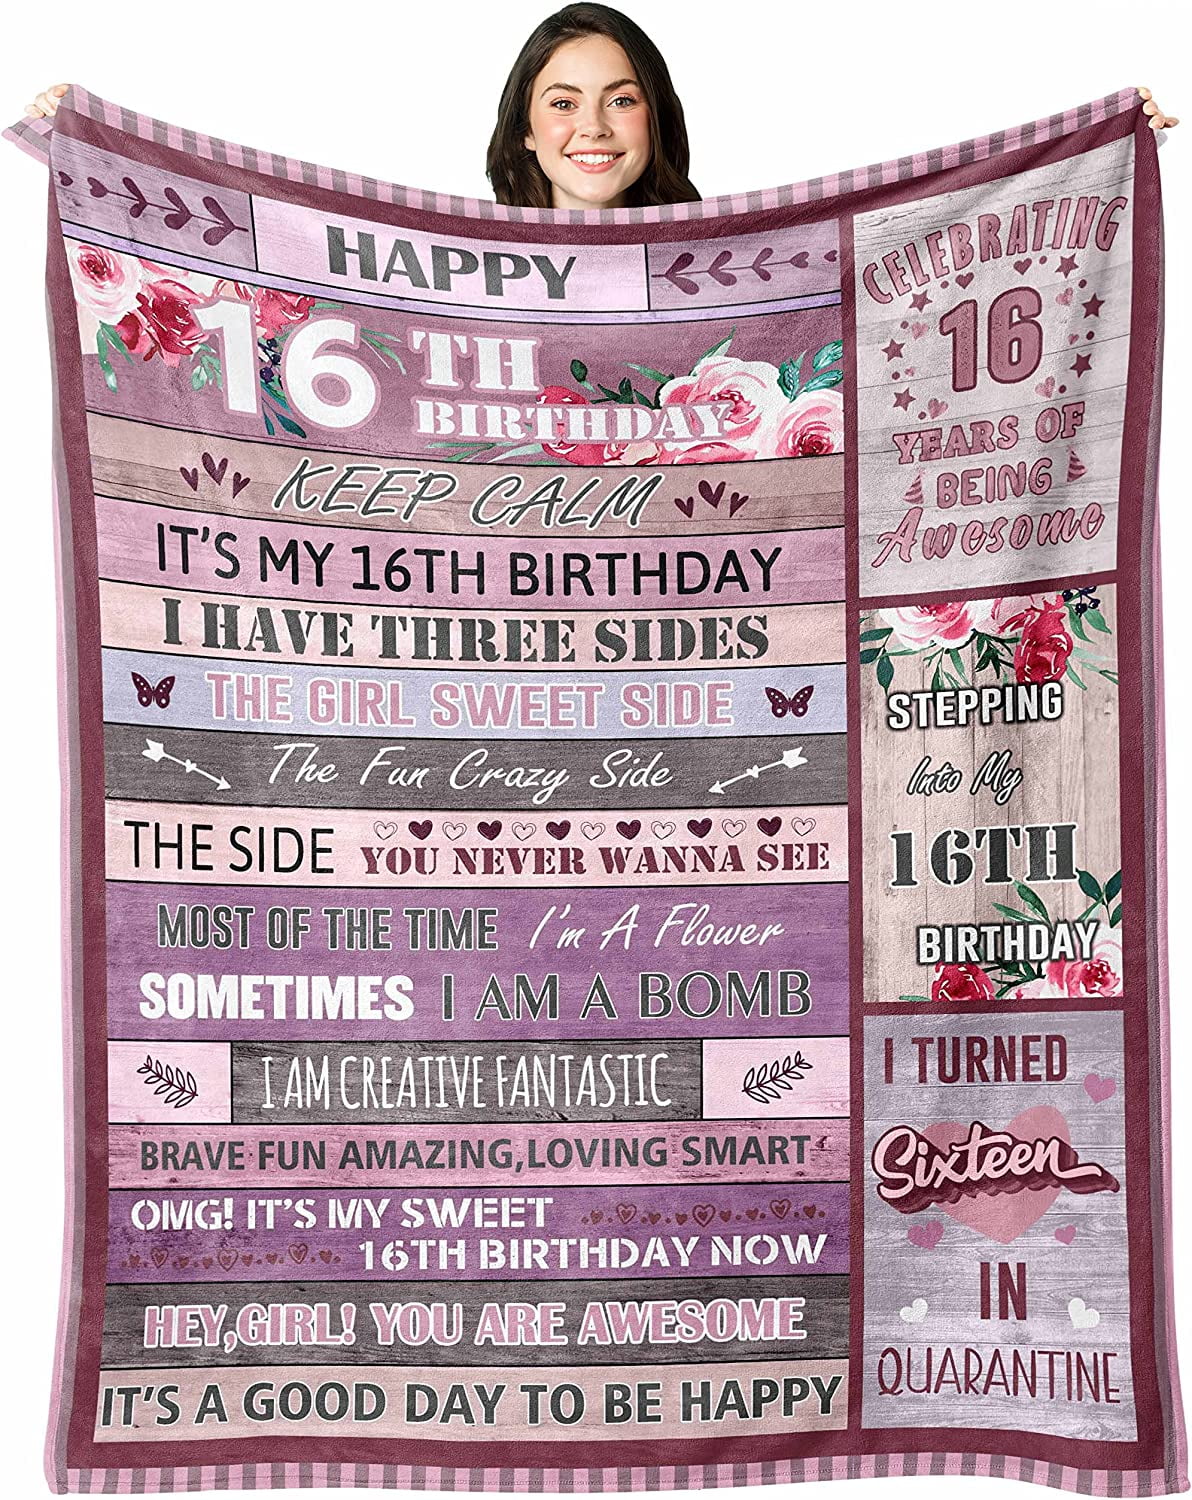 Hudodmn 11 Year Old Girl Birthday Gift Ideas Blanket, Birthday Gift for 11 Year Old Girl, 11th Birthday Gift for Girls, Gift for 11 Year Old Girl